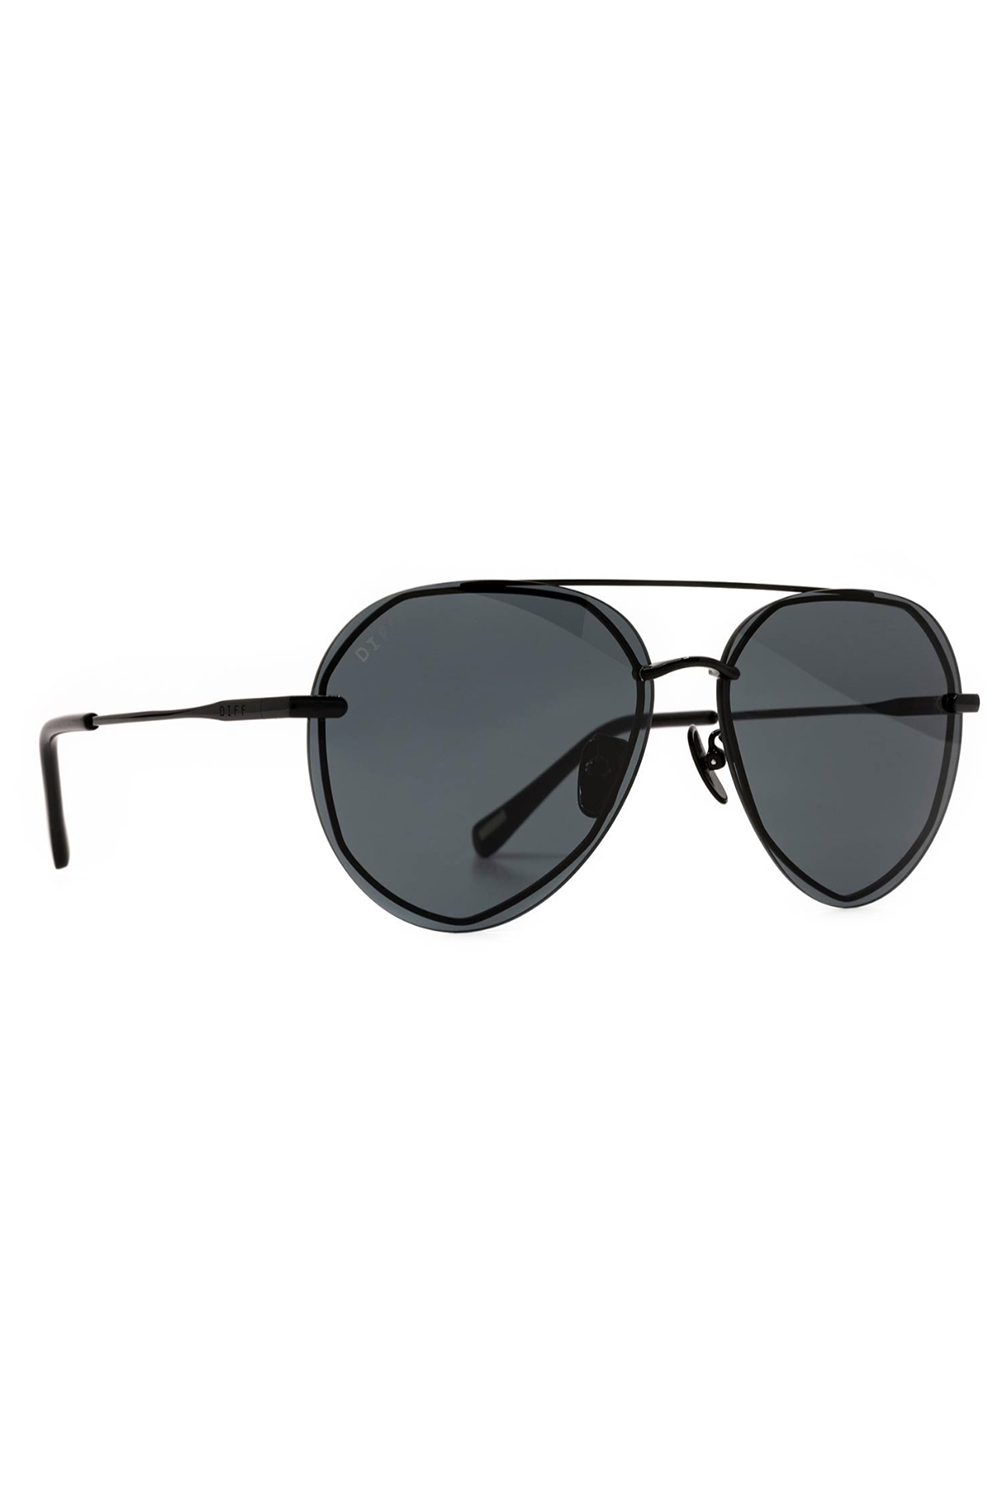 Lenox Sunglasses - Black Grey